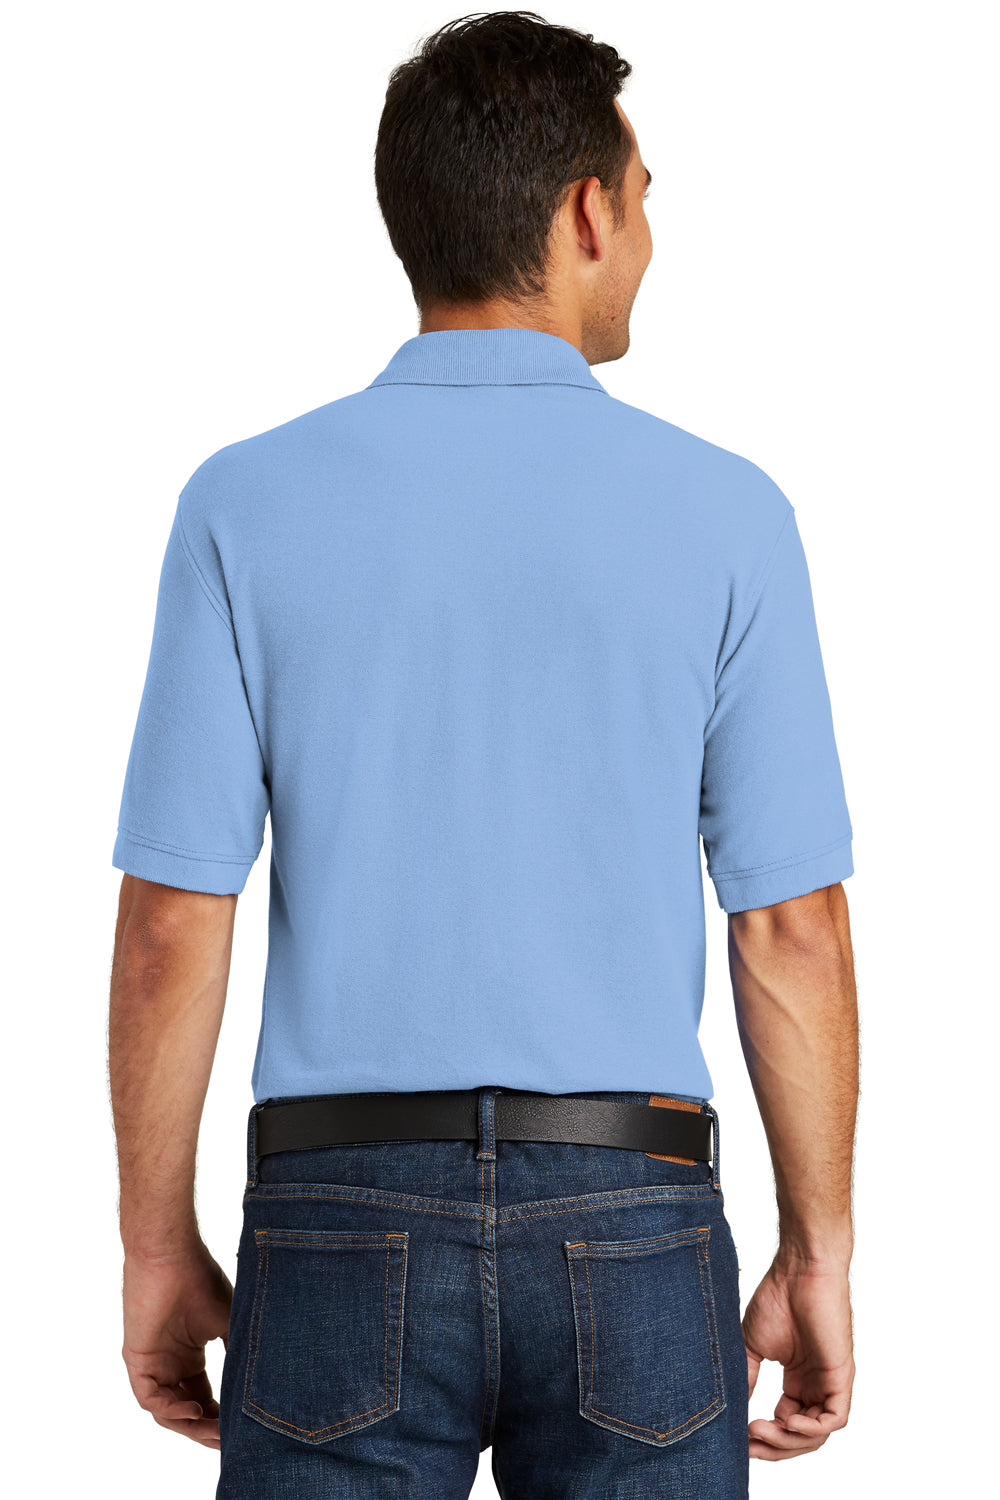 Port & Company KP155 Mens Core Stain Resistant Short Sleeve Polo Shirt Light Blue Back